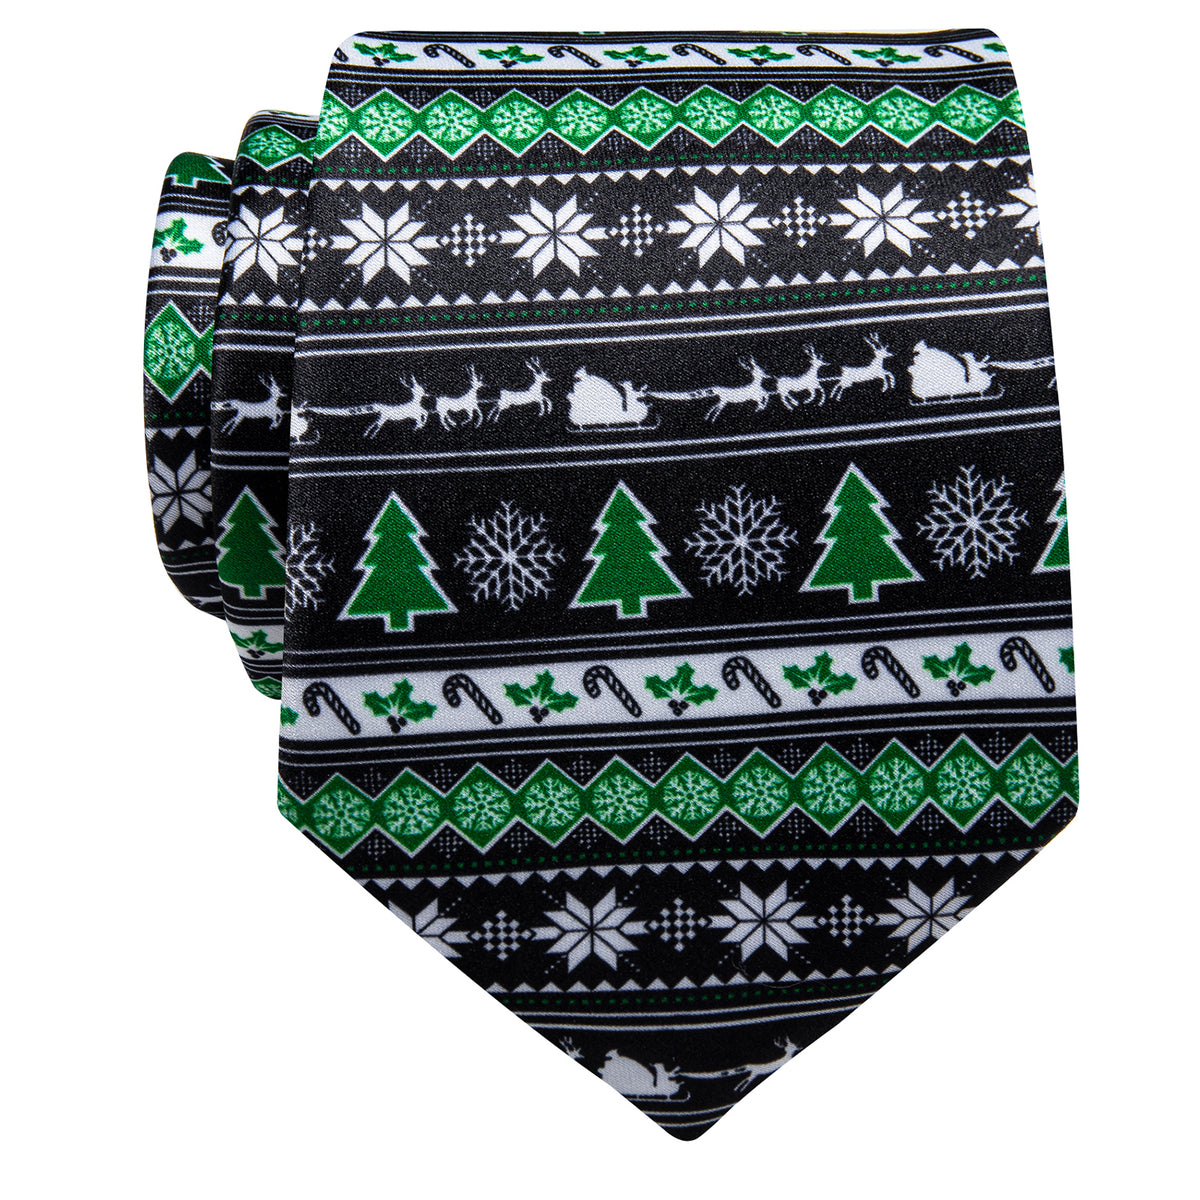 Black Green Christmas Tree Novelty Silk Necktie with Golden Tie Clip